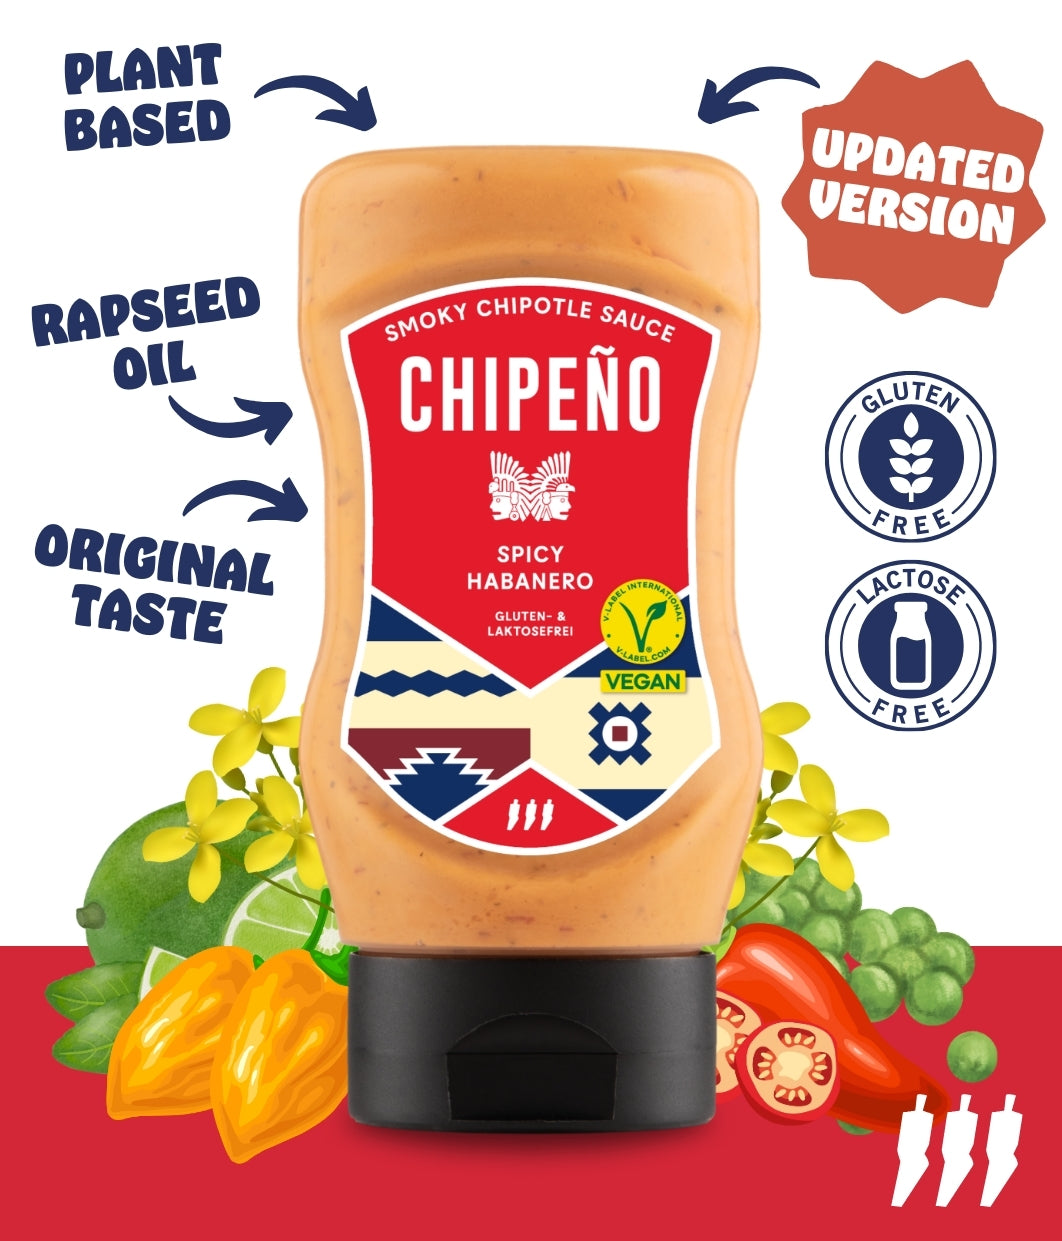 Chipeño™ Spicy Habanero 300ml MHD 02/25